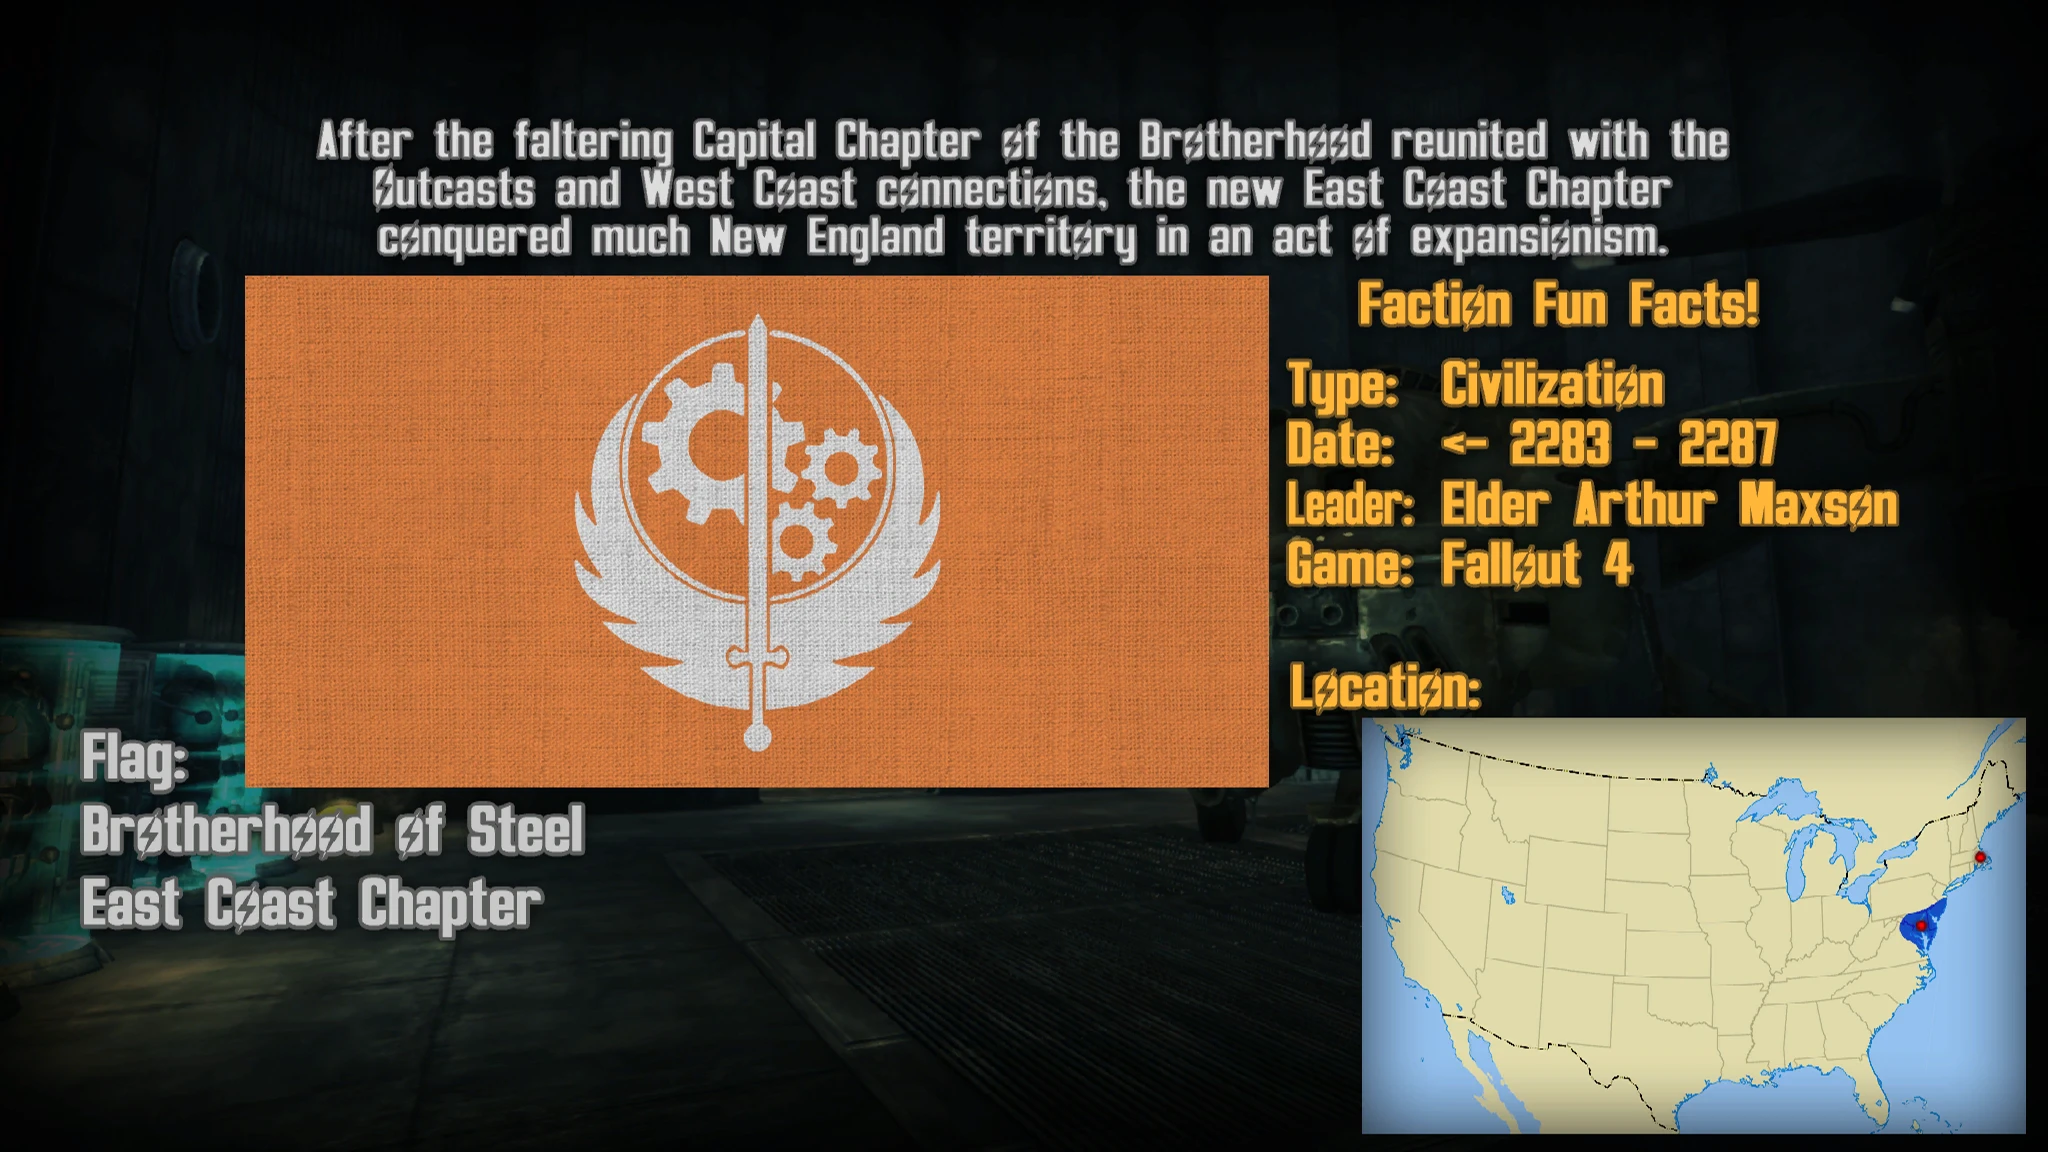 Faction Fun Fact Loading Screens At Fallout New Vegas Mods